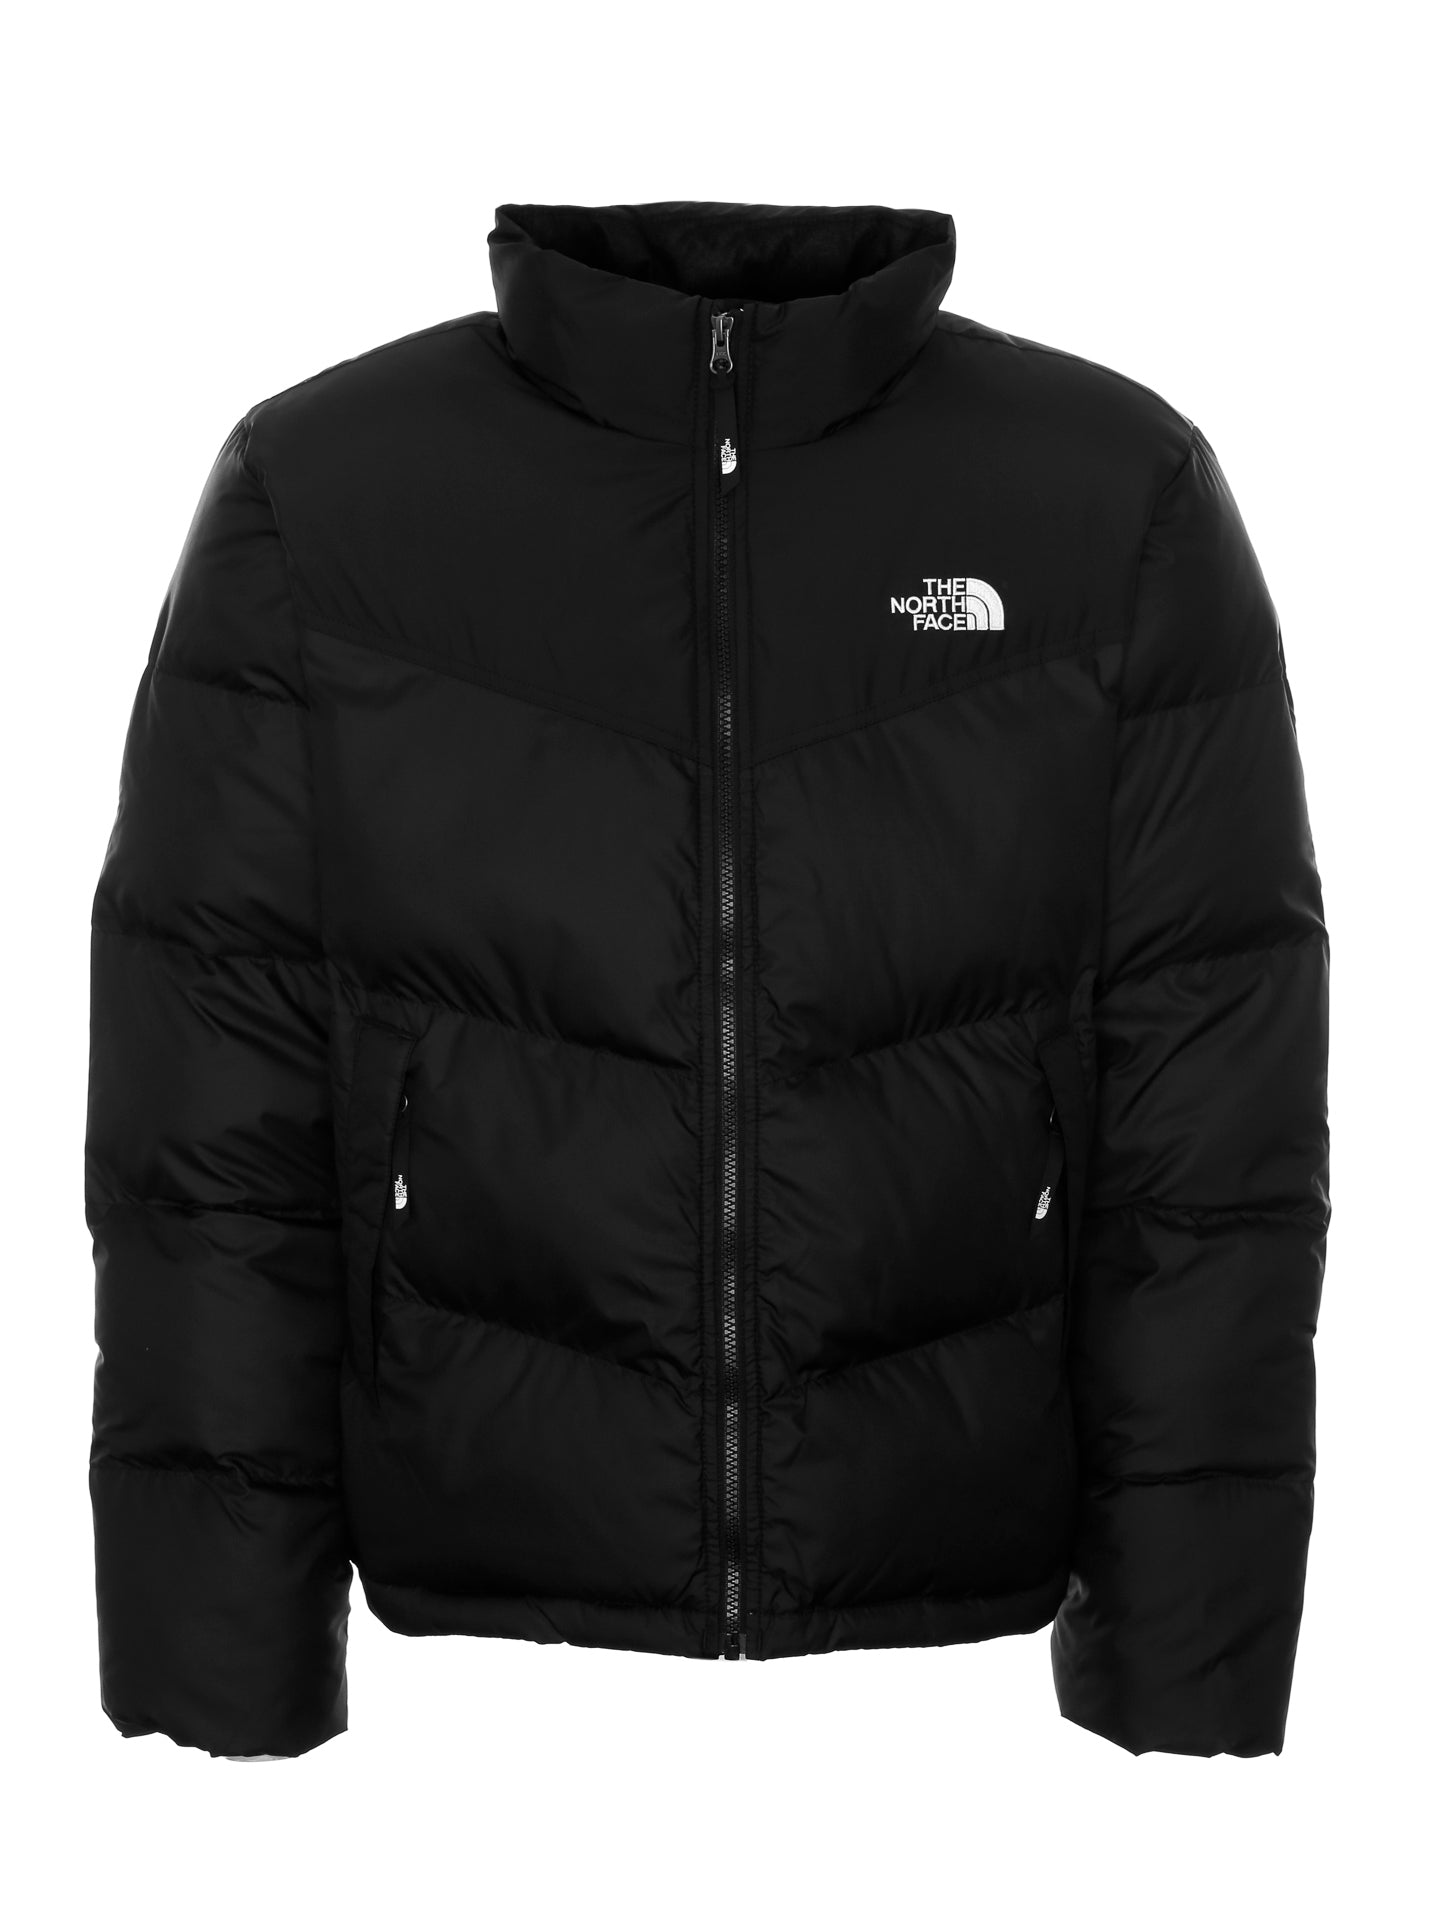 The North Face Black Label Saikuru Jacket